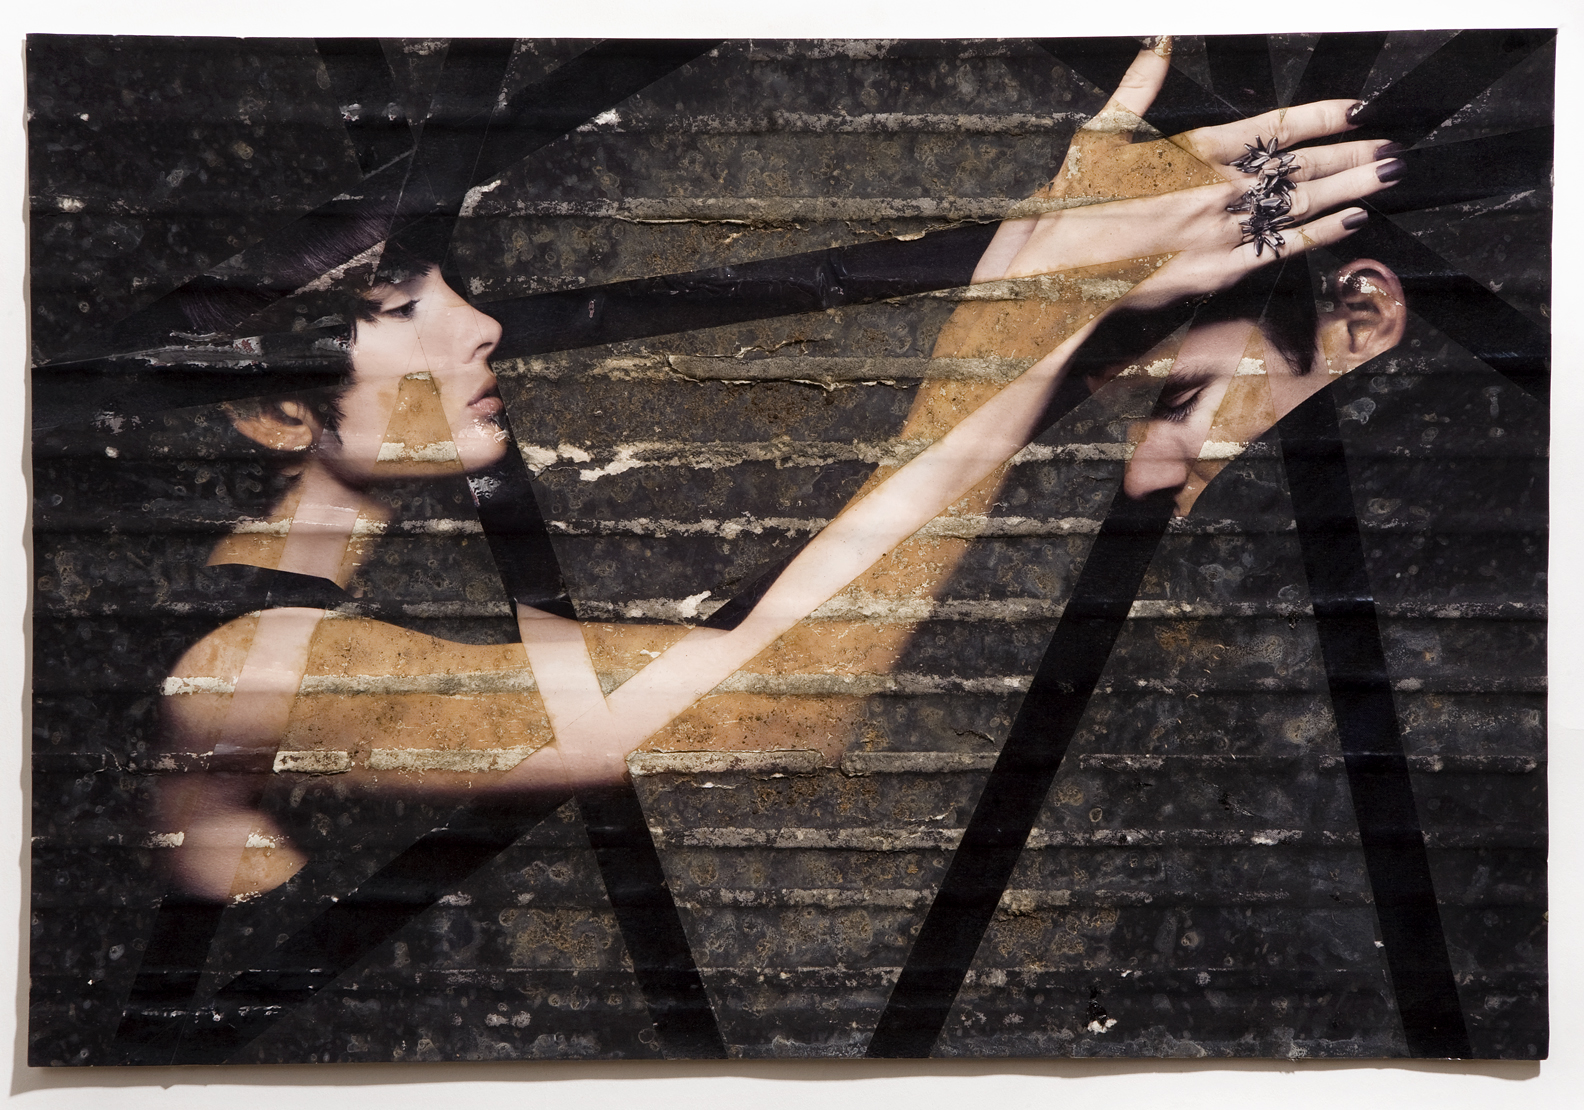 Meagan &amp; John Black, inkjet print, packing tape, coffee, coffee grounds, milk, 13"x19", 2010